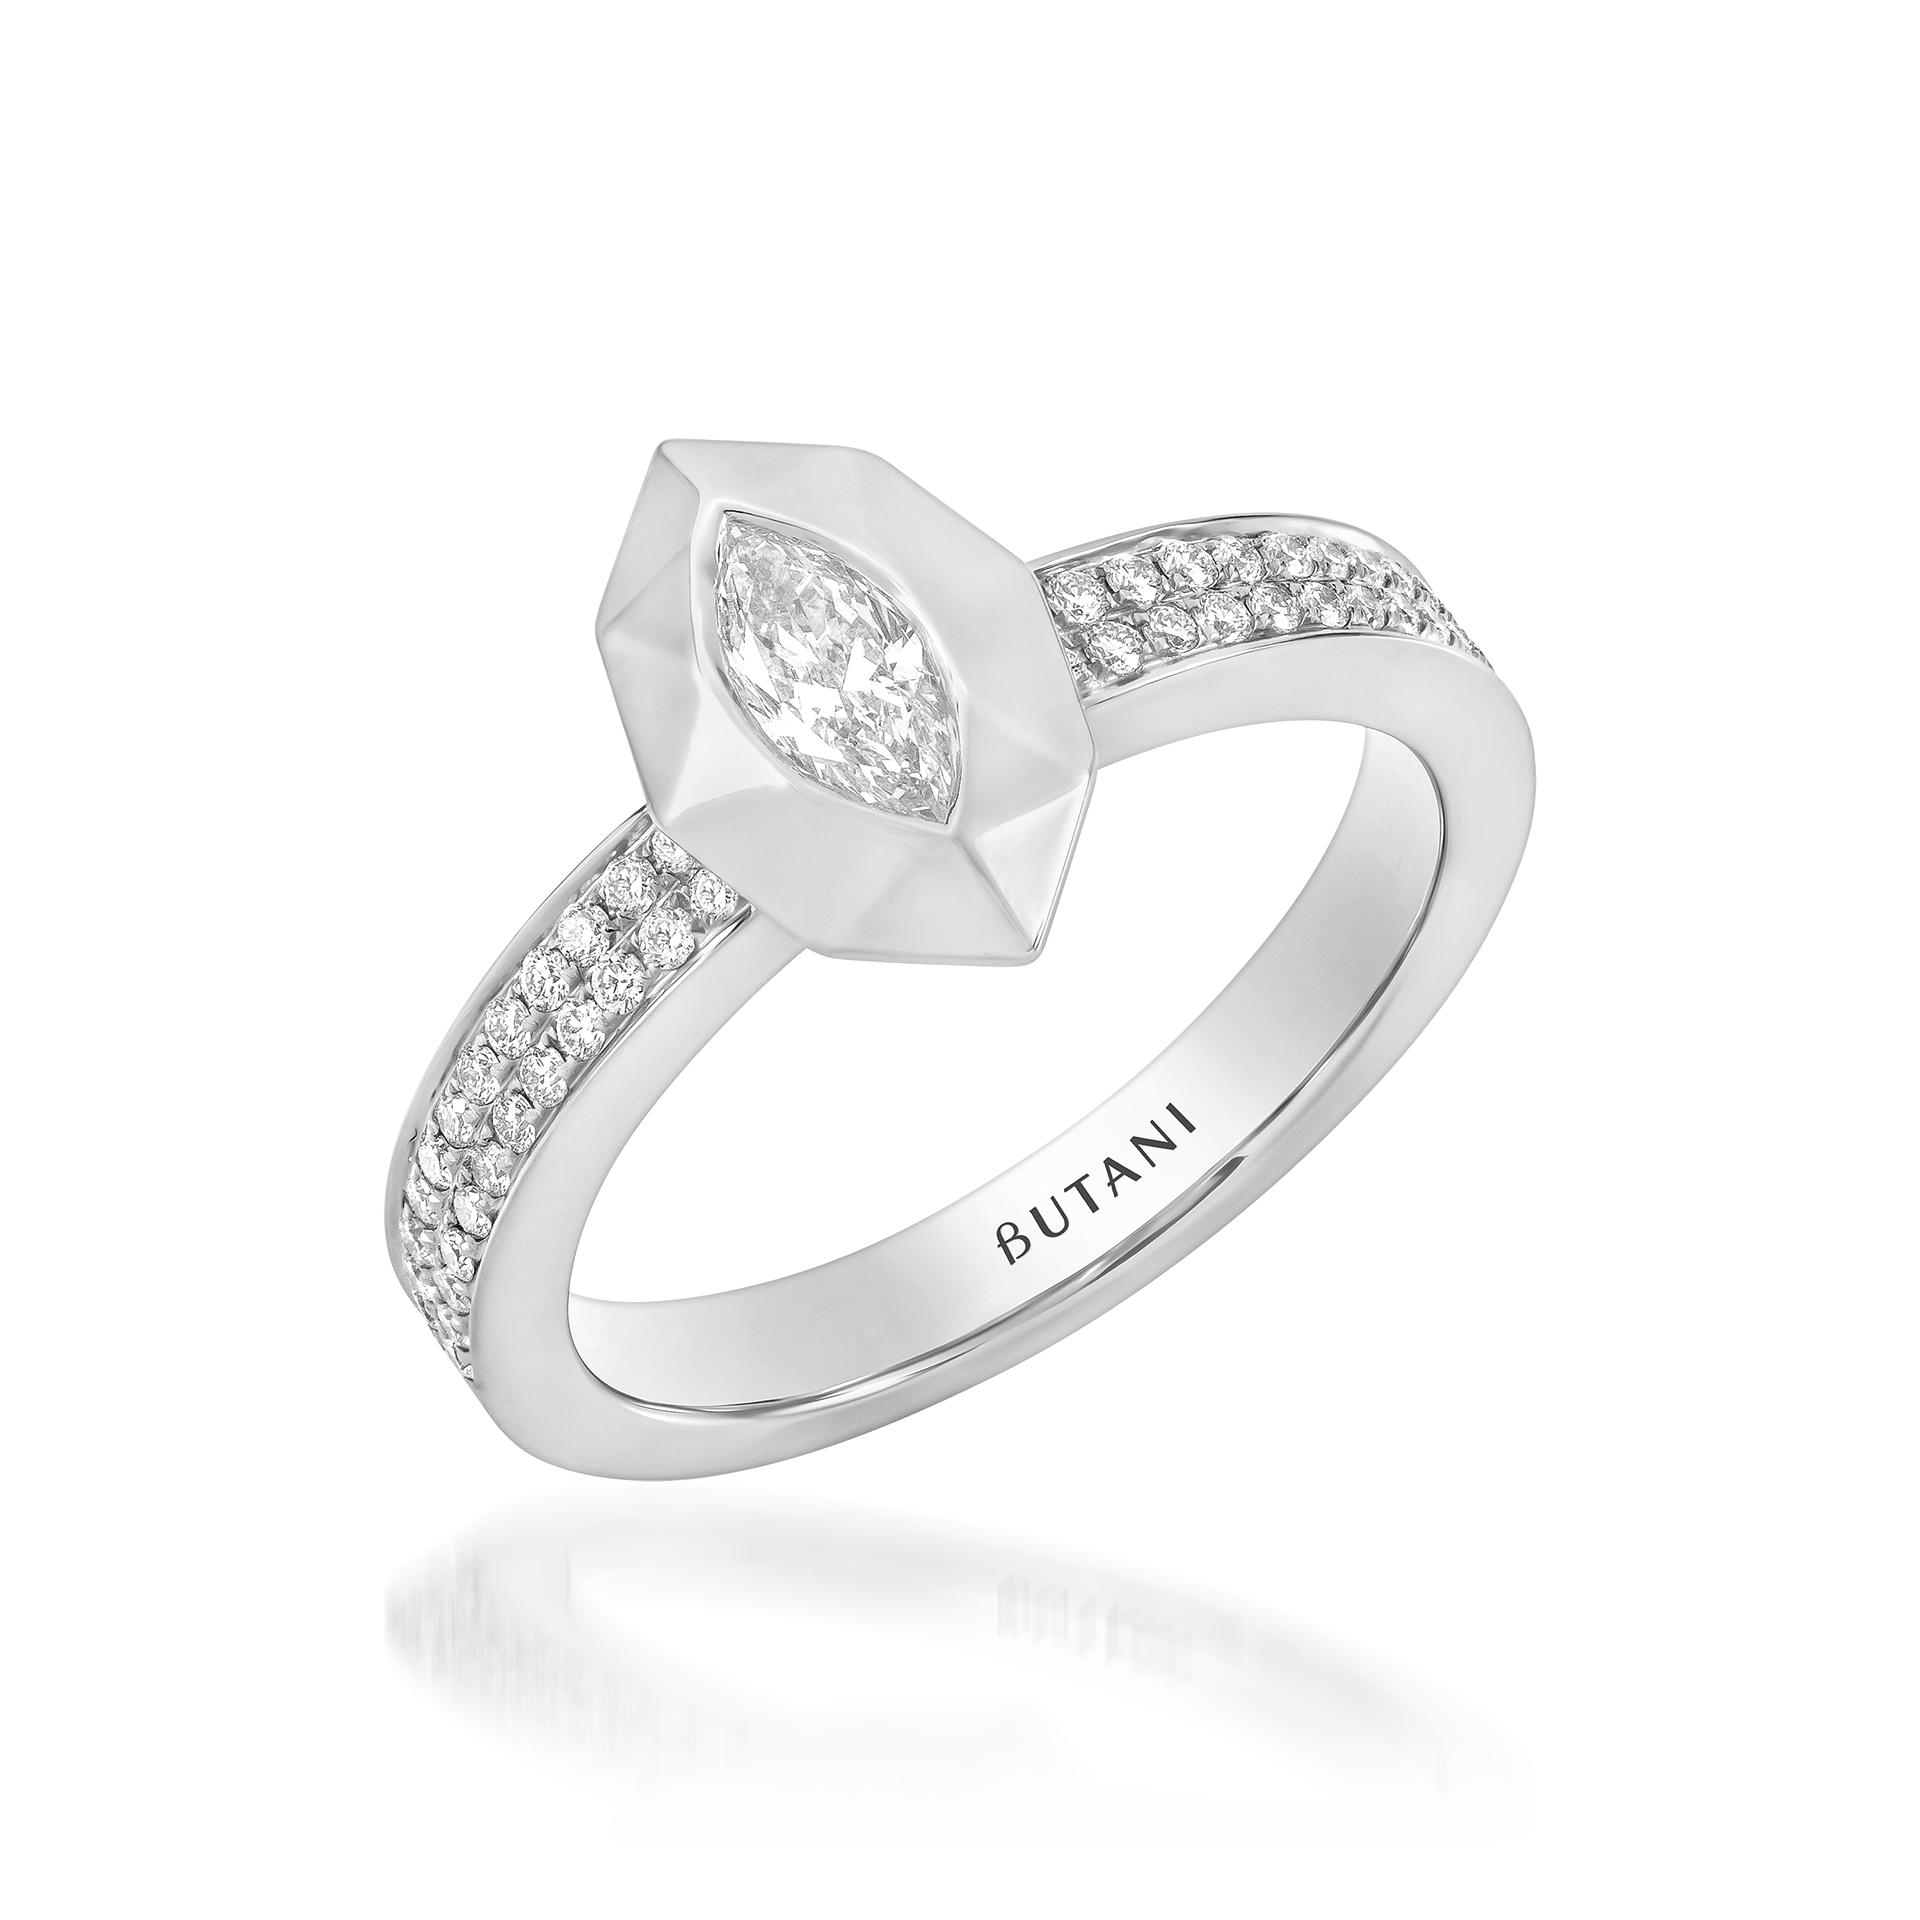 Metropolitan Marquise-cut Diamond Ring in 18K White Gold